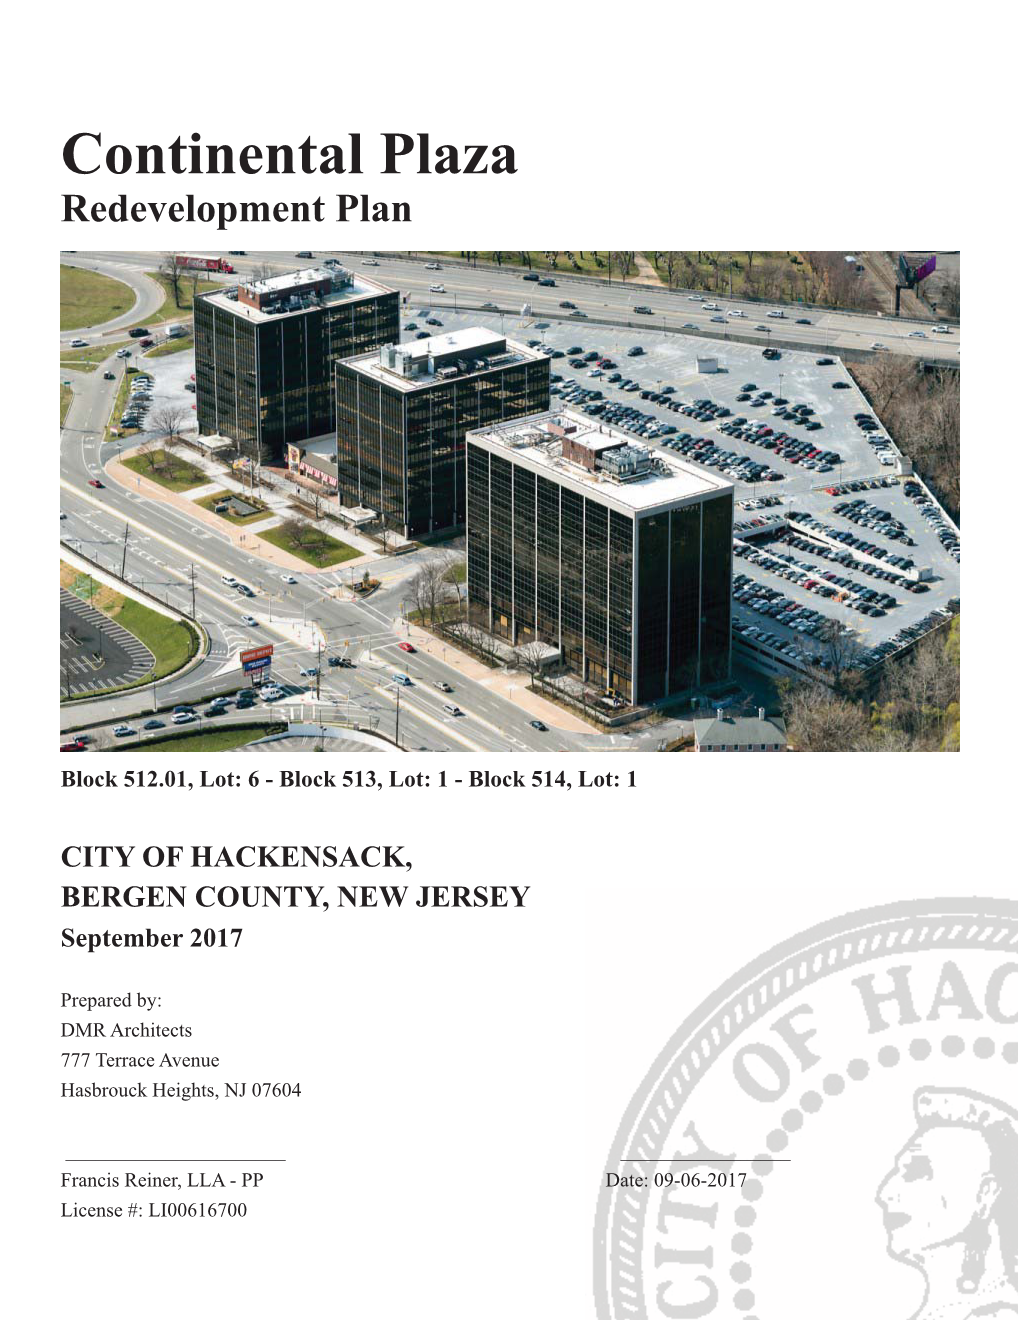 Continental Plaza Redevelopment Plan